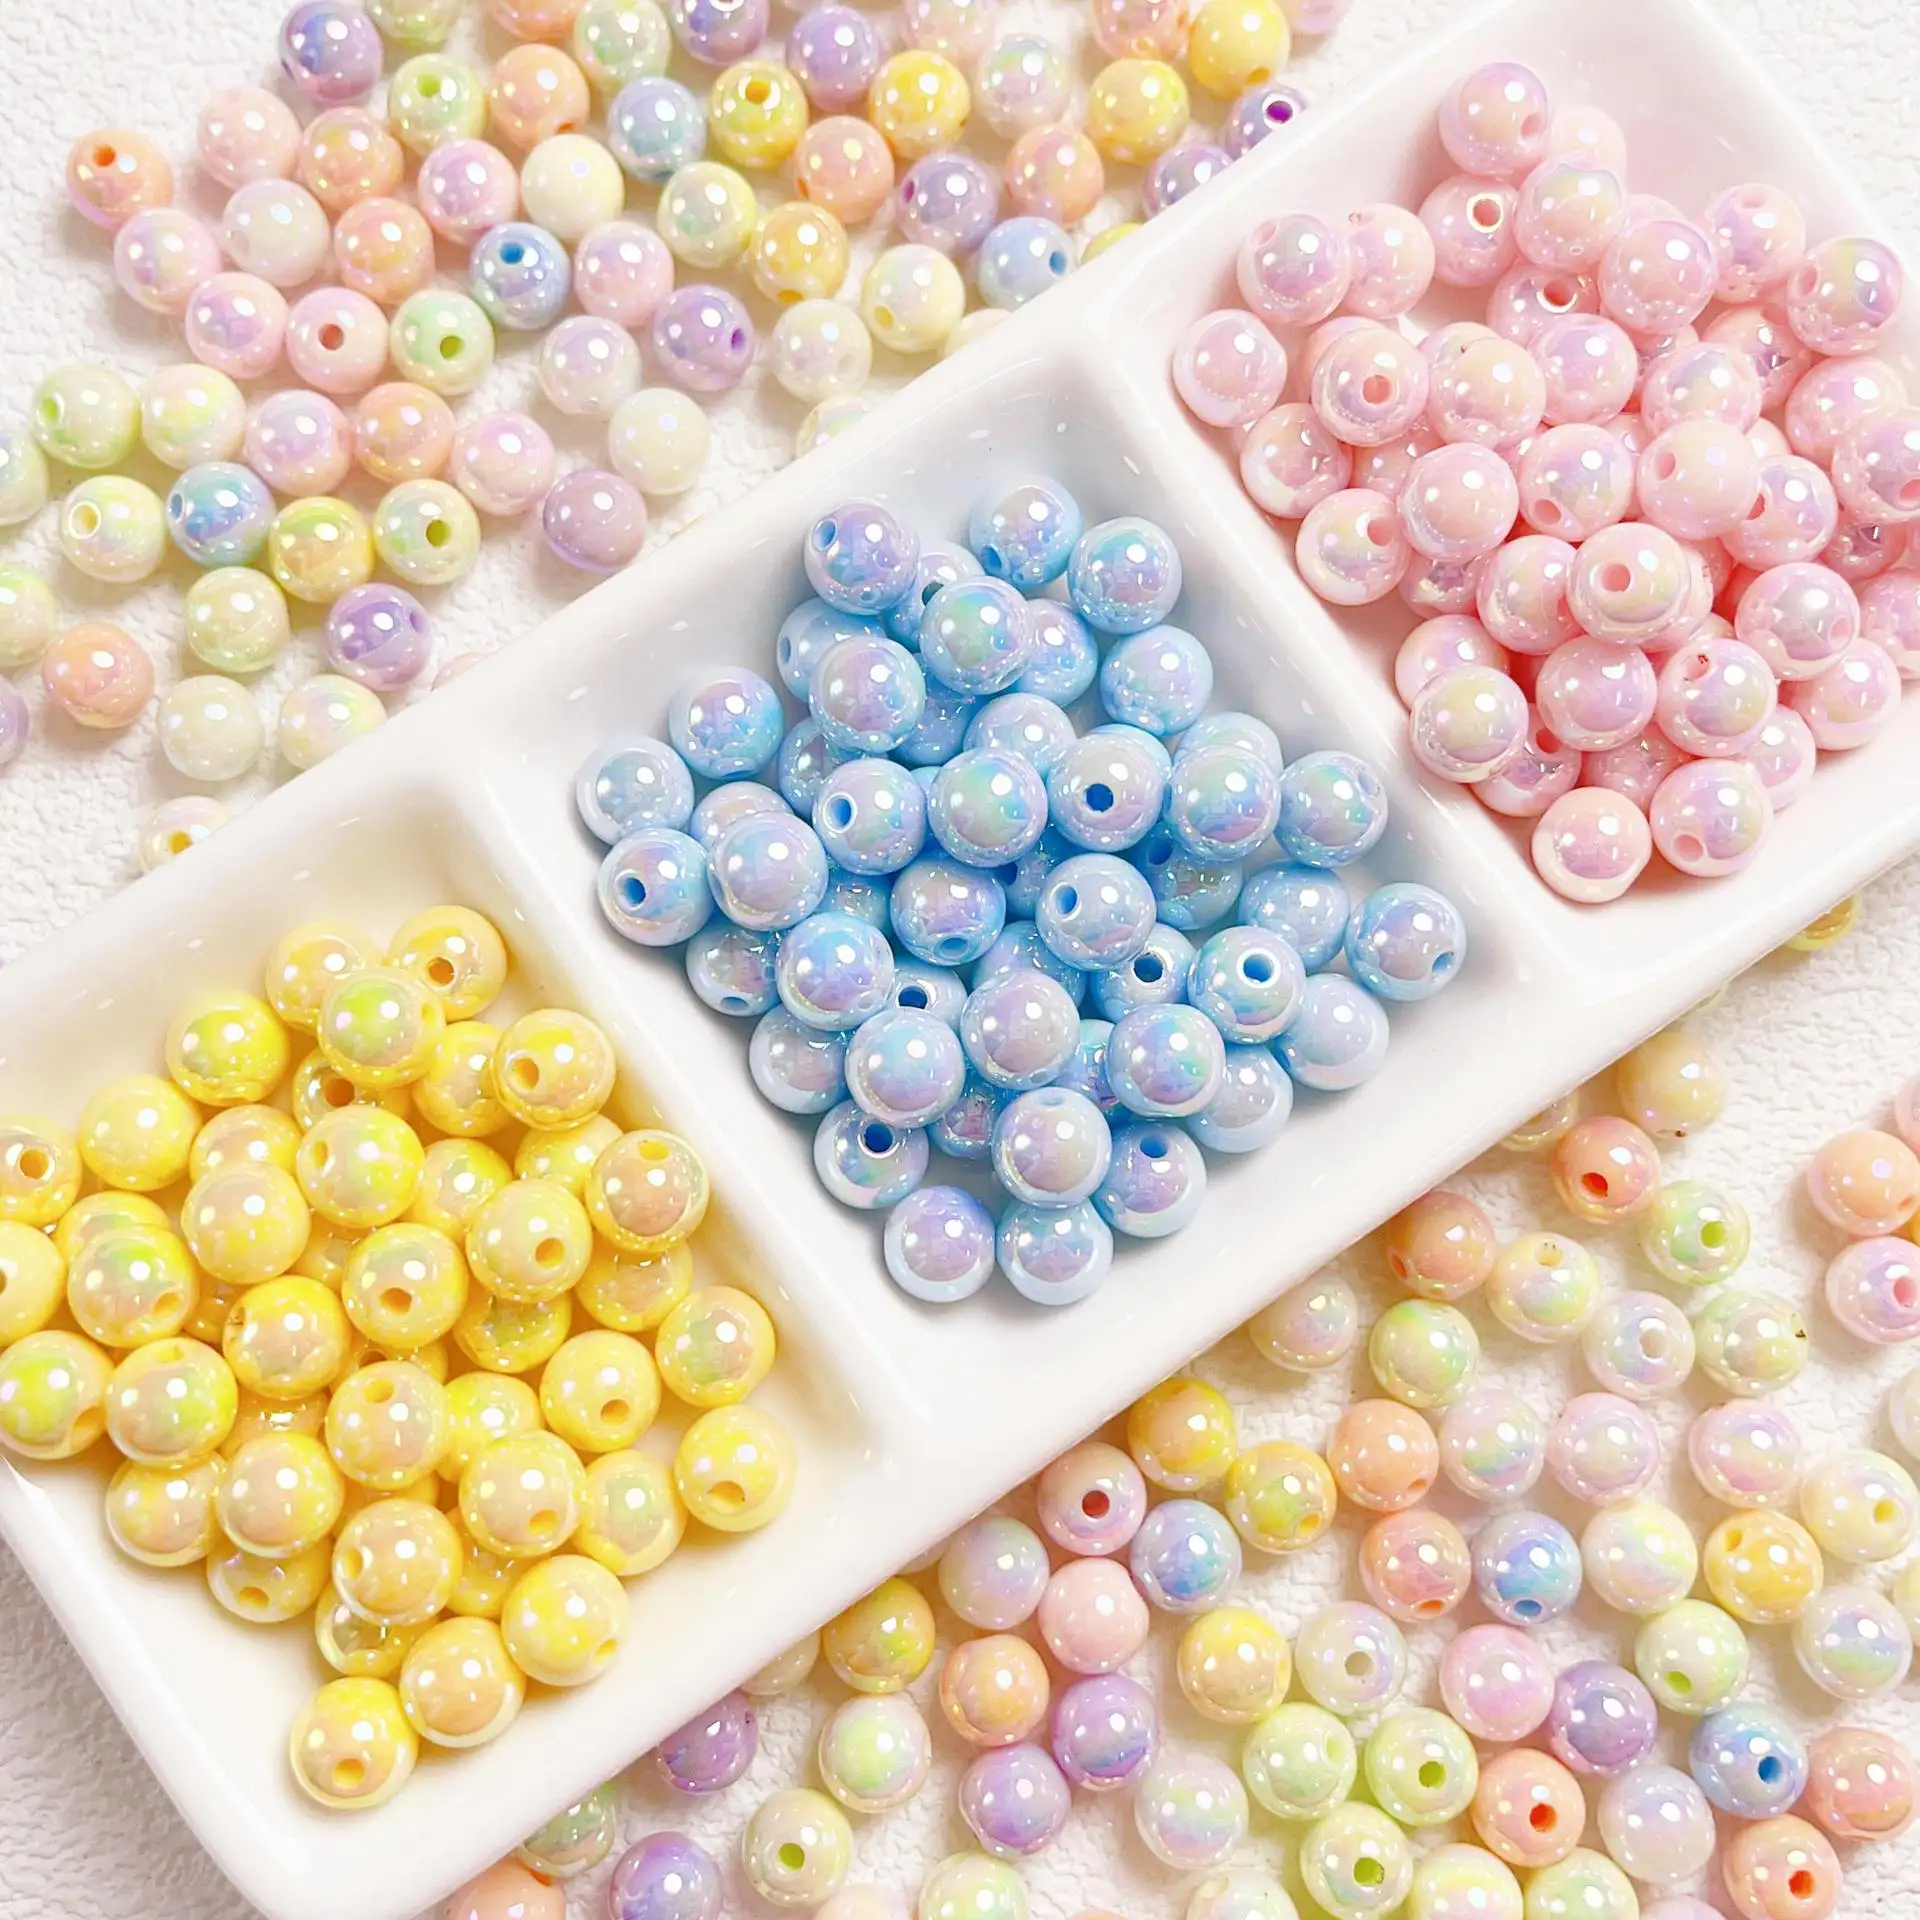 Factory direct diy loose round fluorescent bracelet bead mix acrylic bubblegum uv luminous beads for jewelry making set